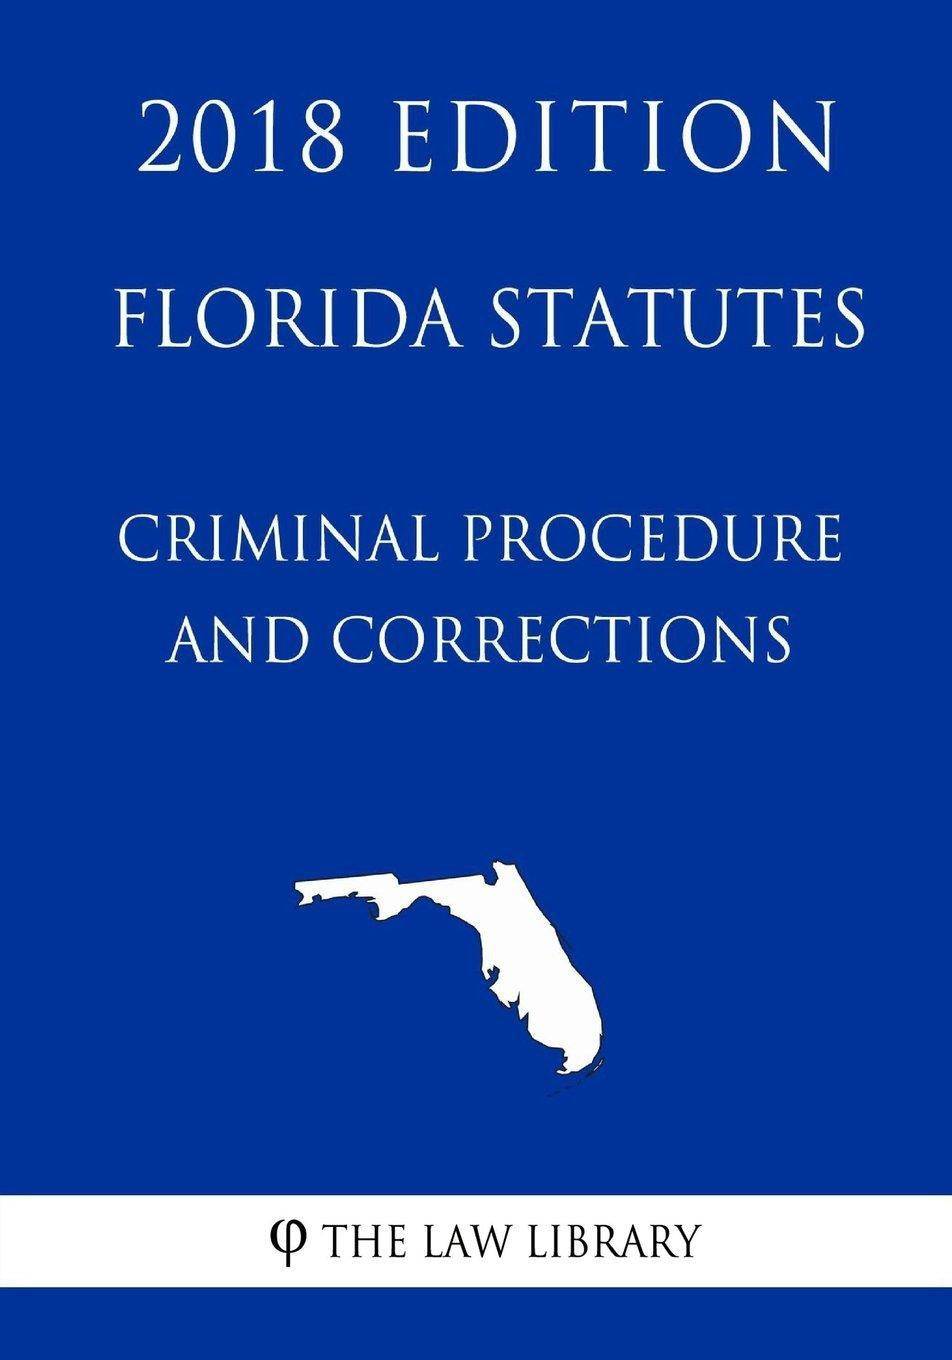 Florida Statutes - Criminal Procedure and Corrections (2018 Edition) - SureShot Books Publishing LLC